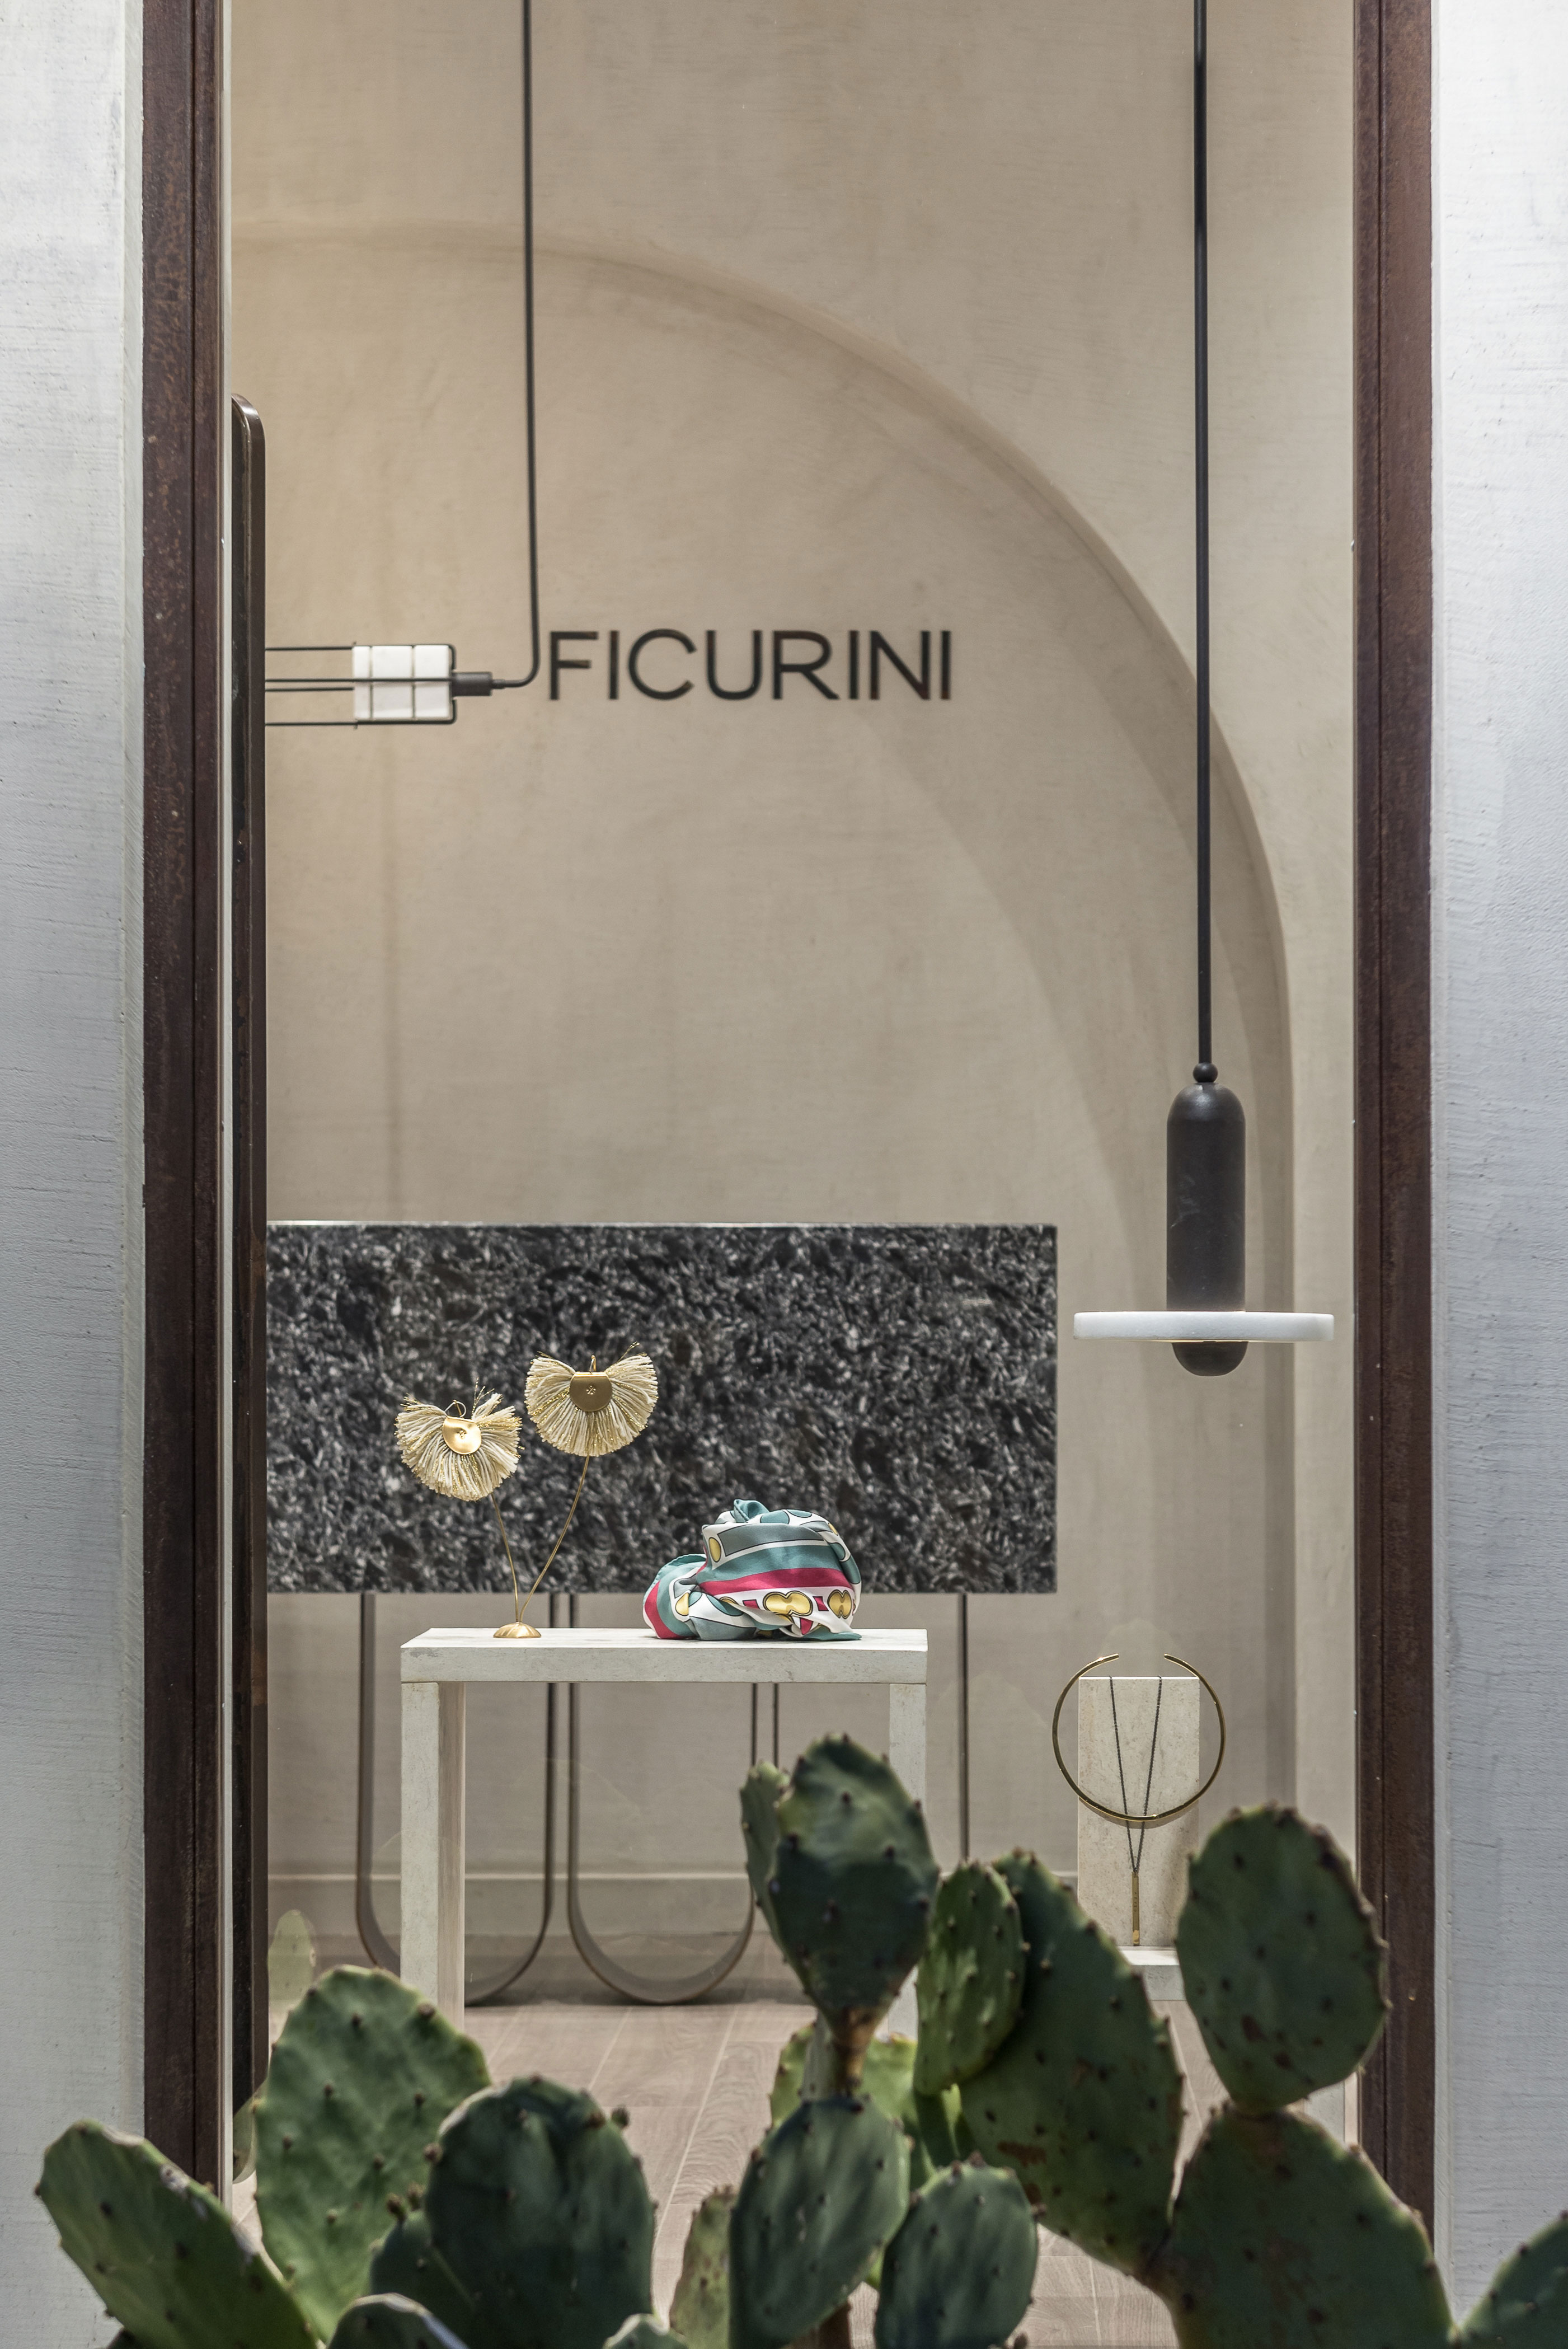 Ficurini Concept Store in Afytos, Greece by Normless Architecture Studio